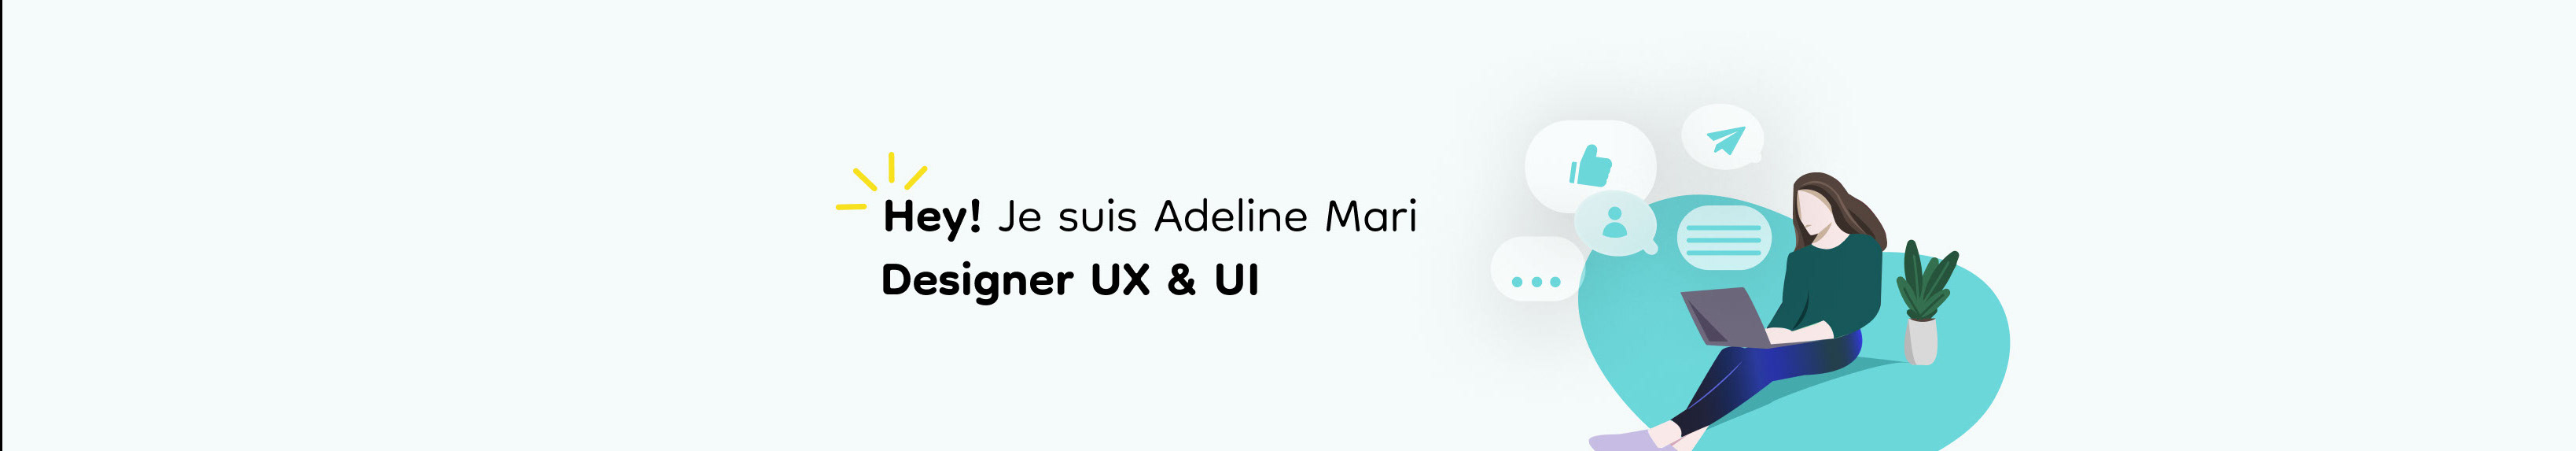 Adeline Mari's profile banner